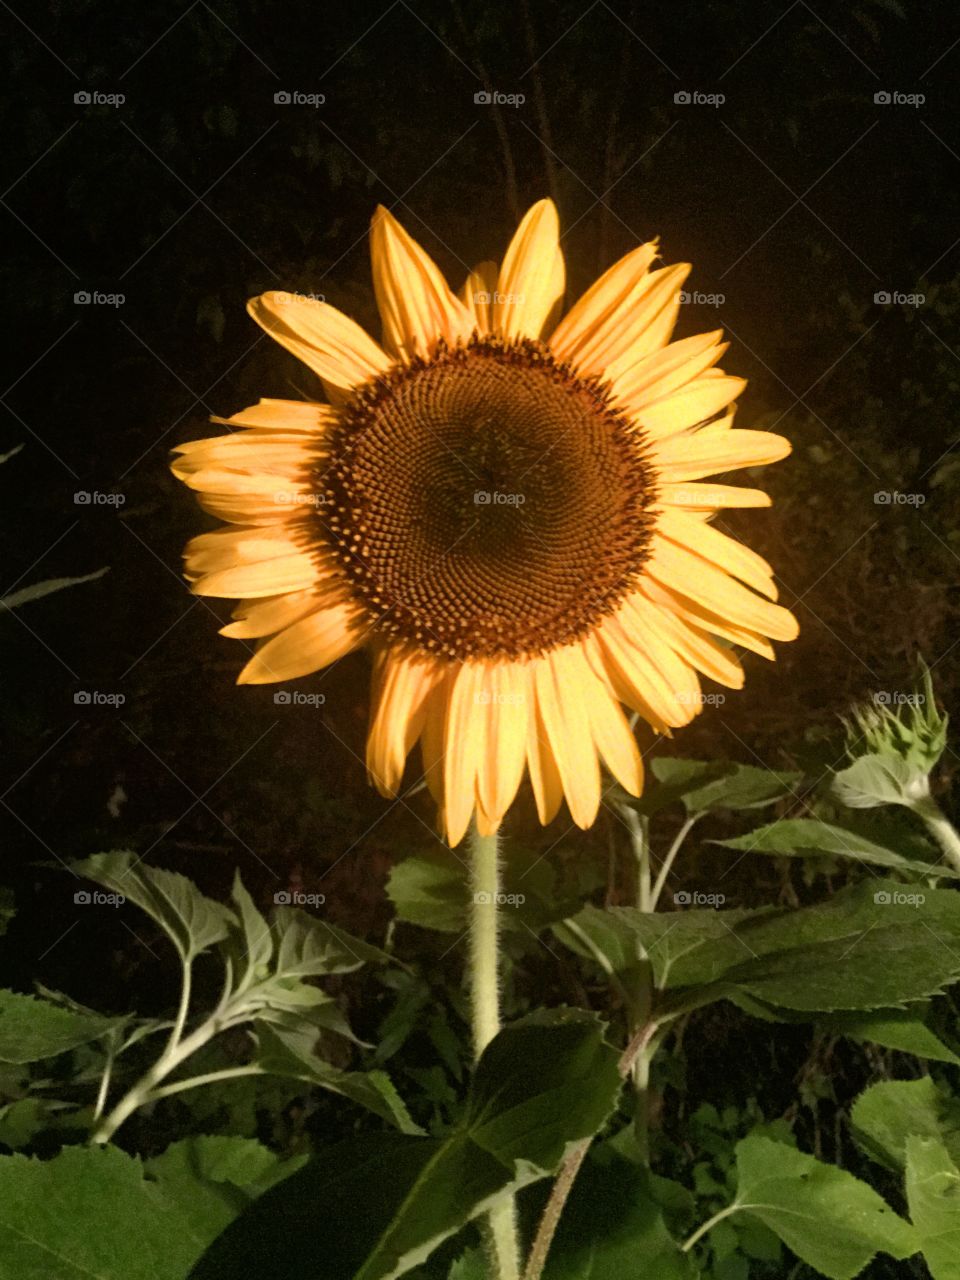 Sunflower by night